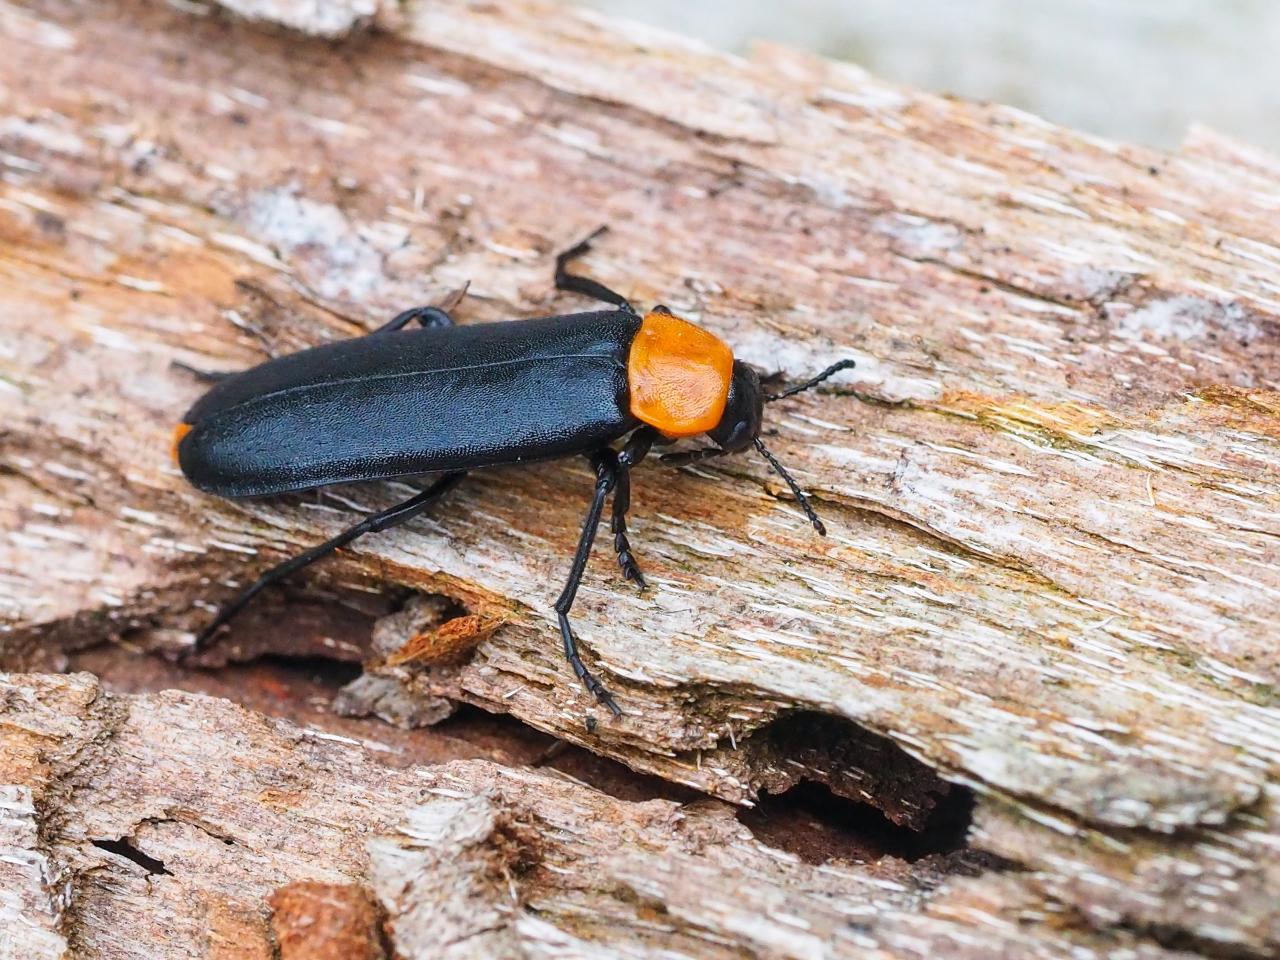 Black-winged beetle with orange neck shield